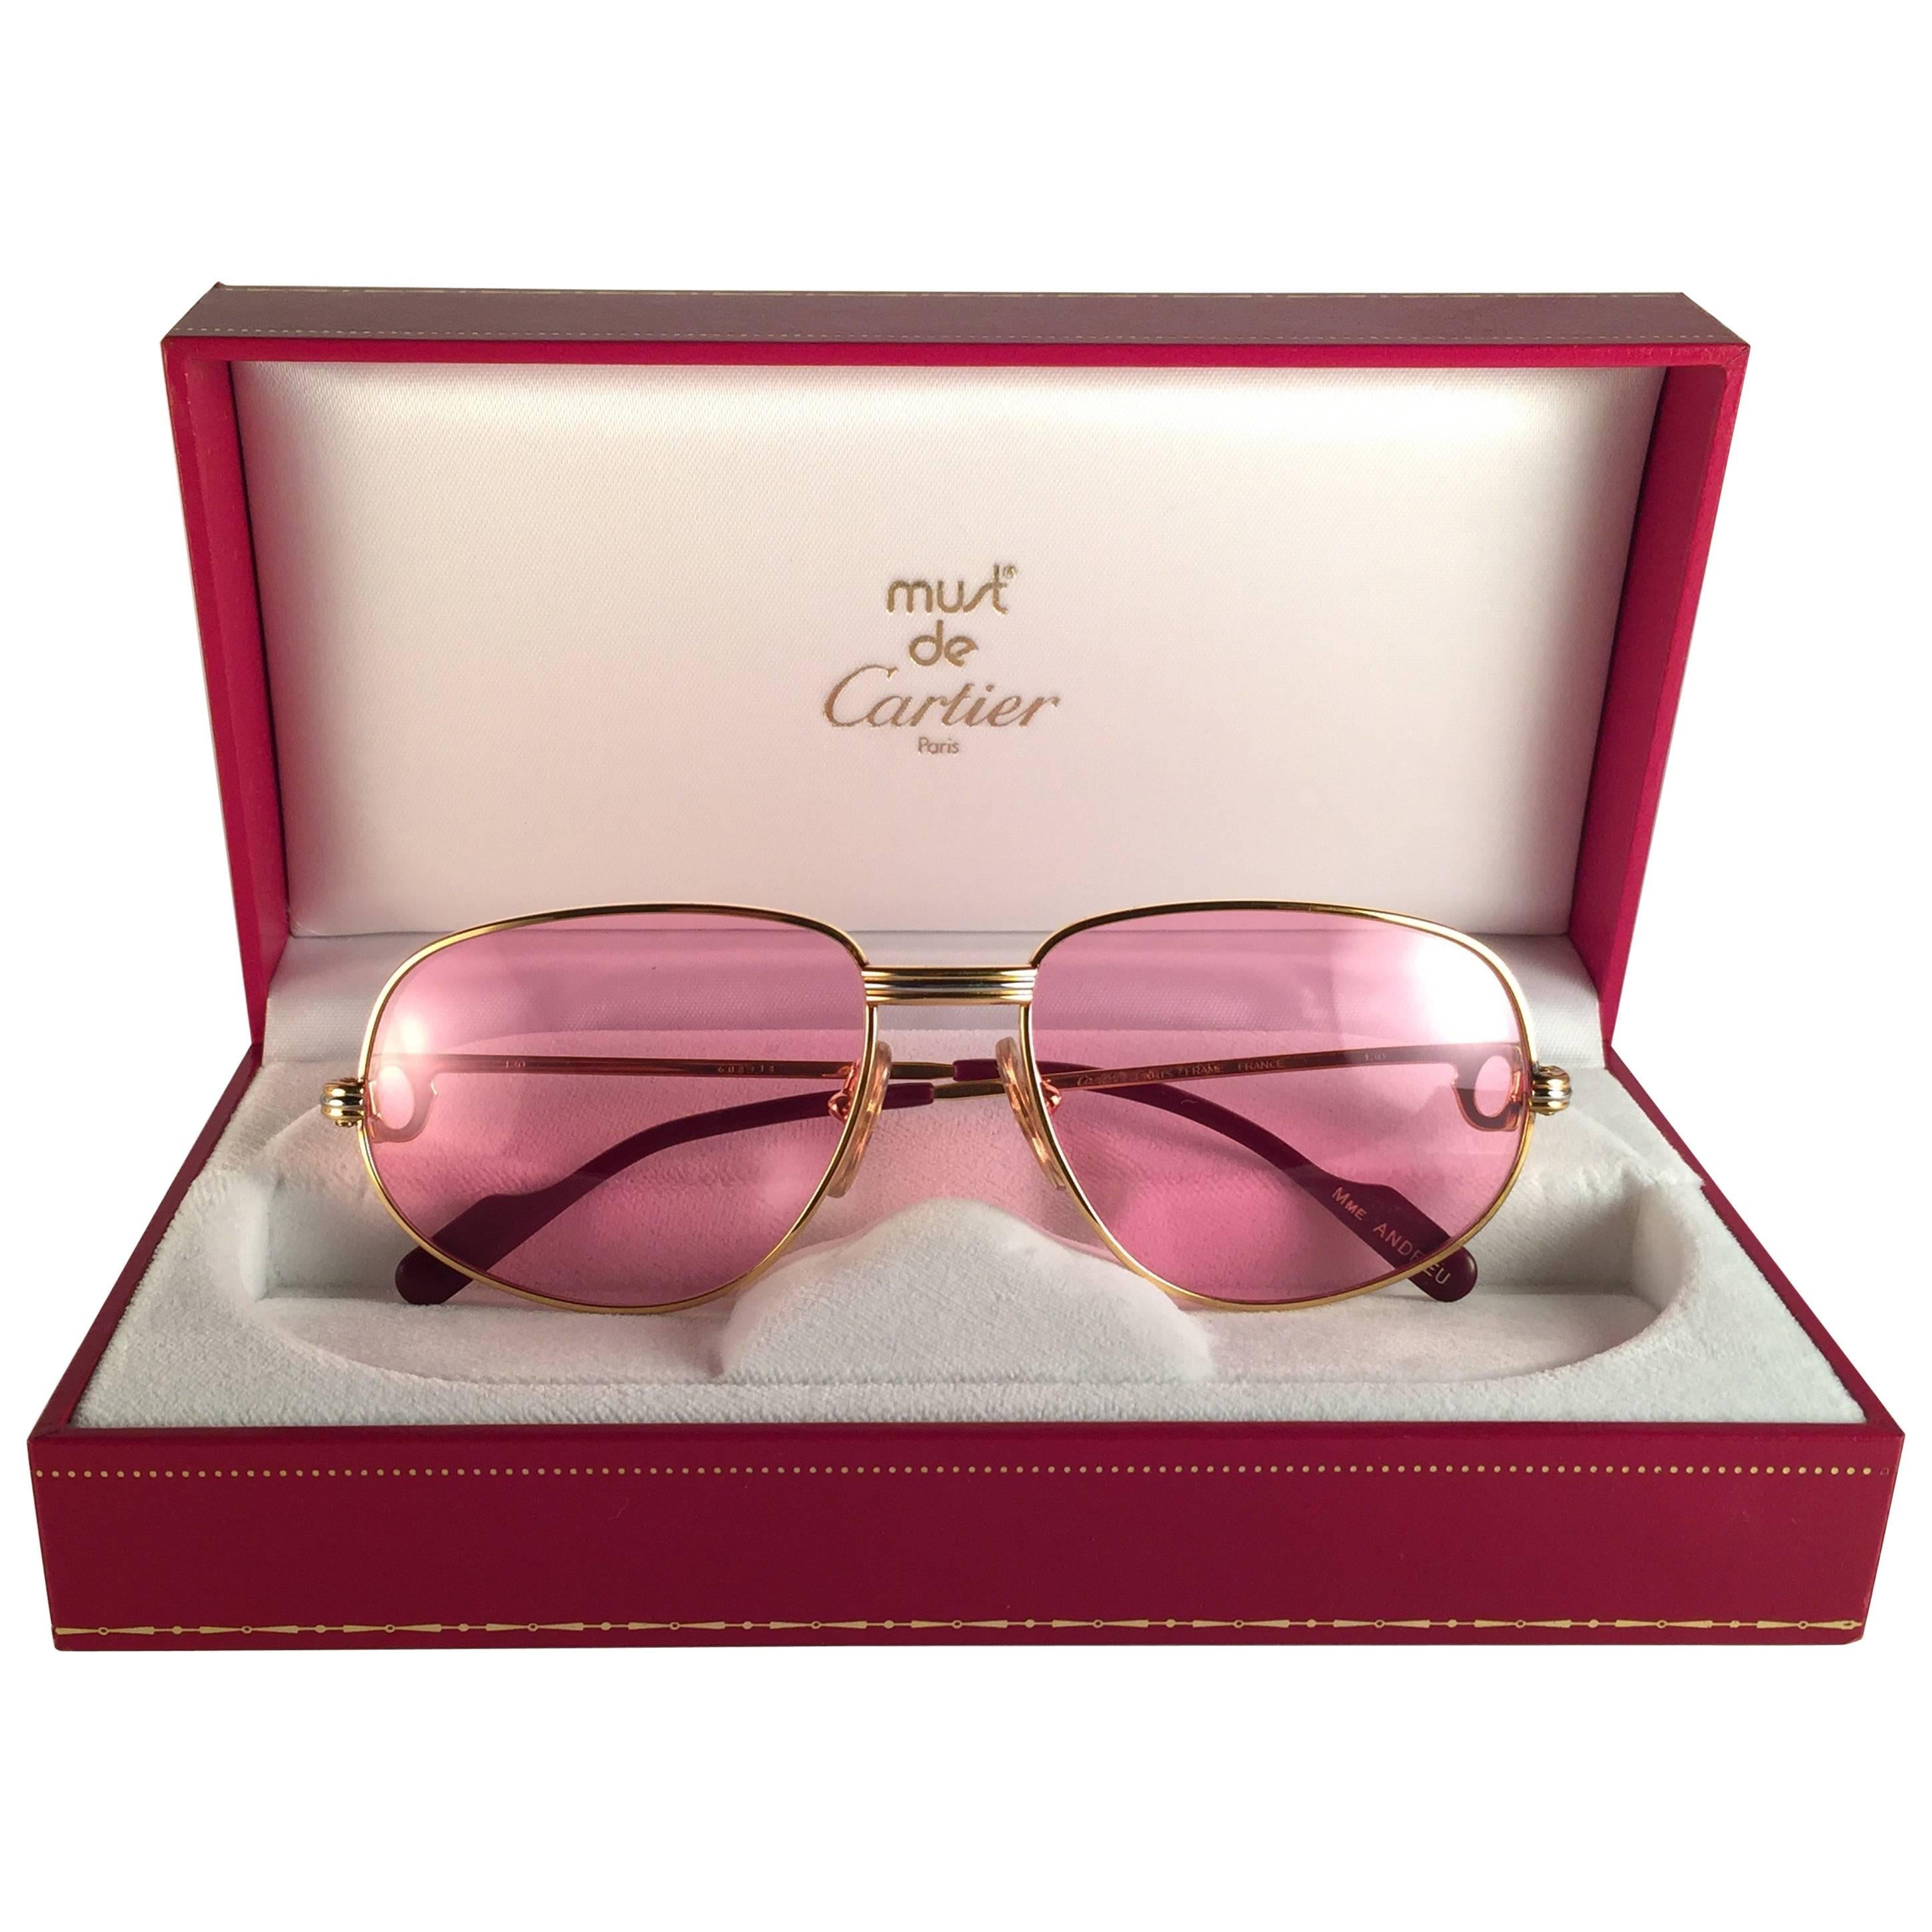 New Vintage Cartier Romance Vendome 54MM France 18k Gold Plated Sunglasses